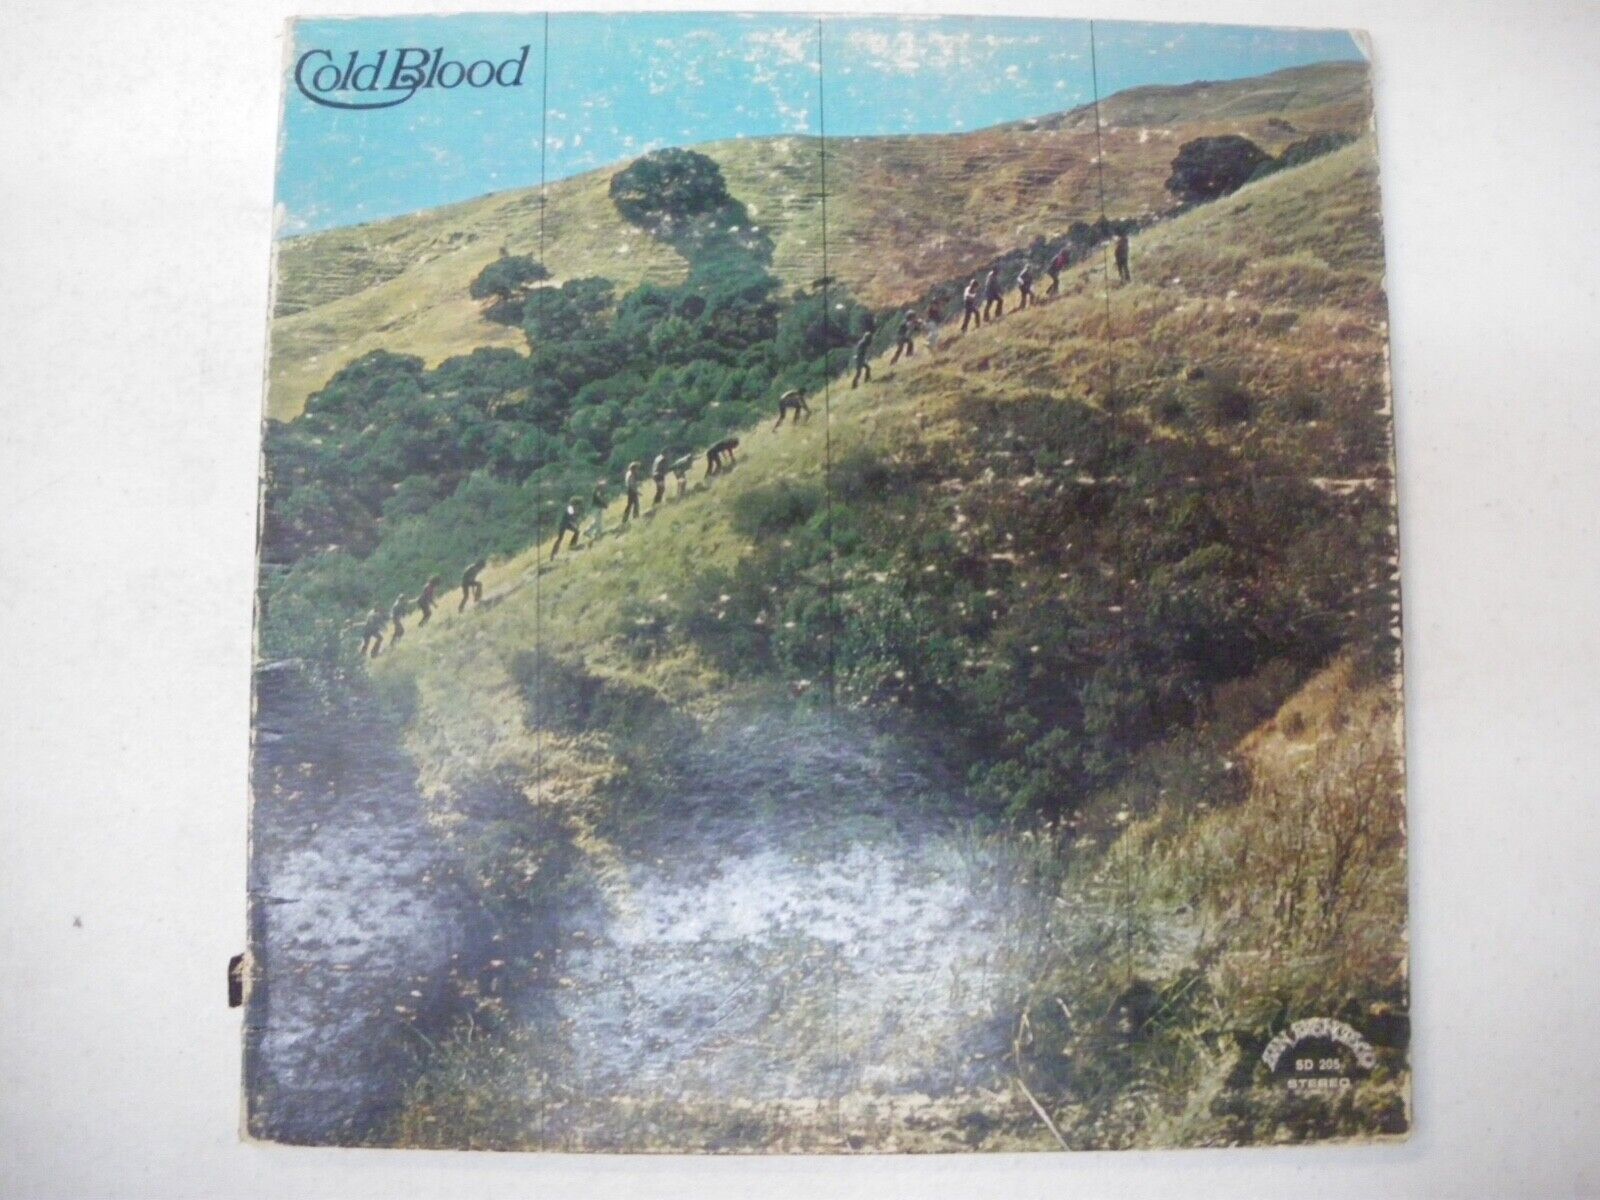 Vintage Vinyl LP -COLD BLOOD-Sisyphus-San Francisco Records SD 205